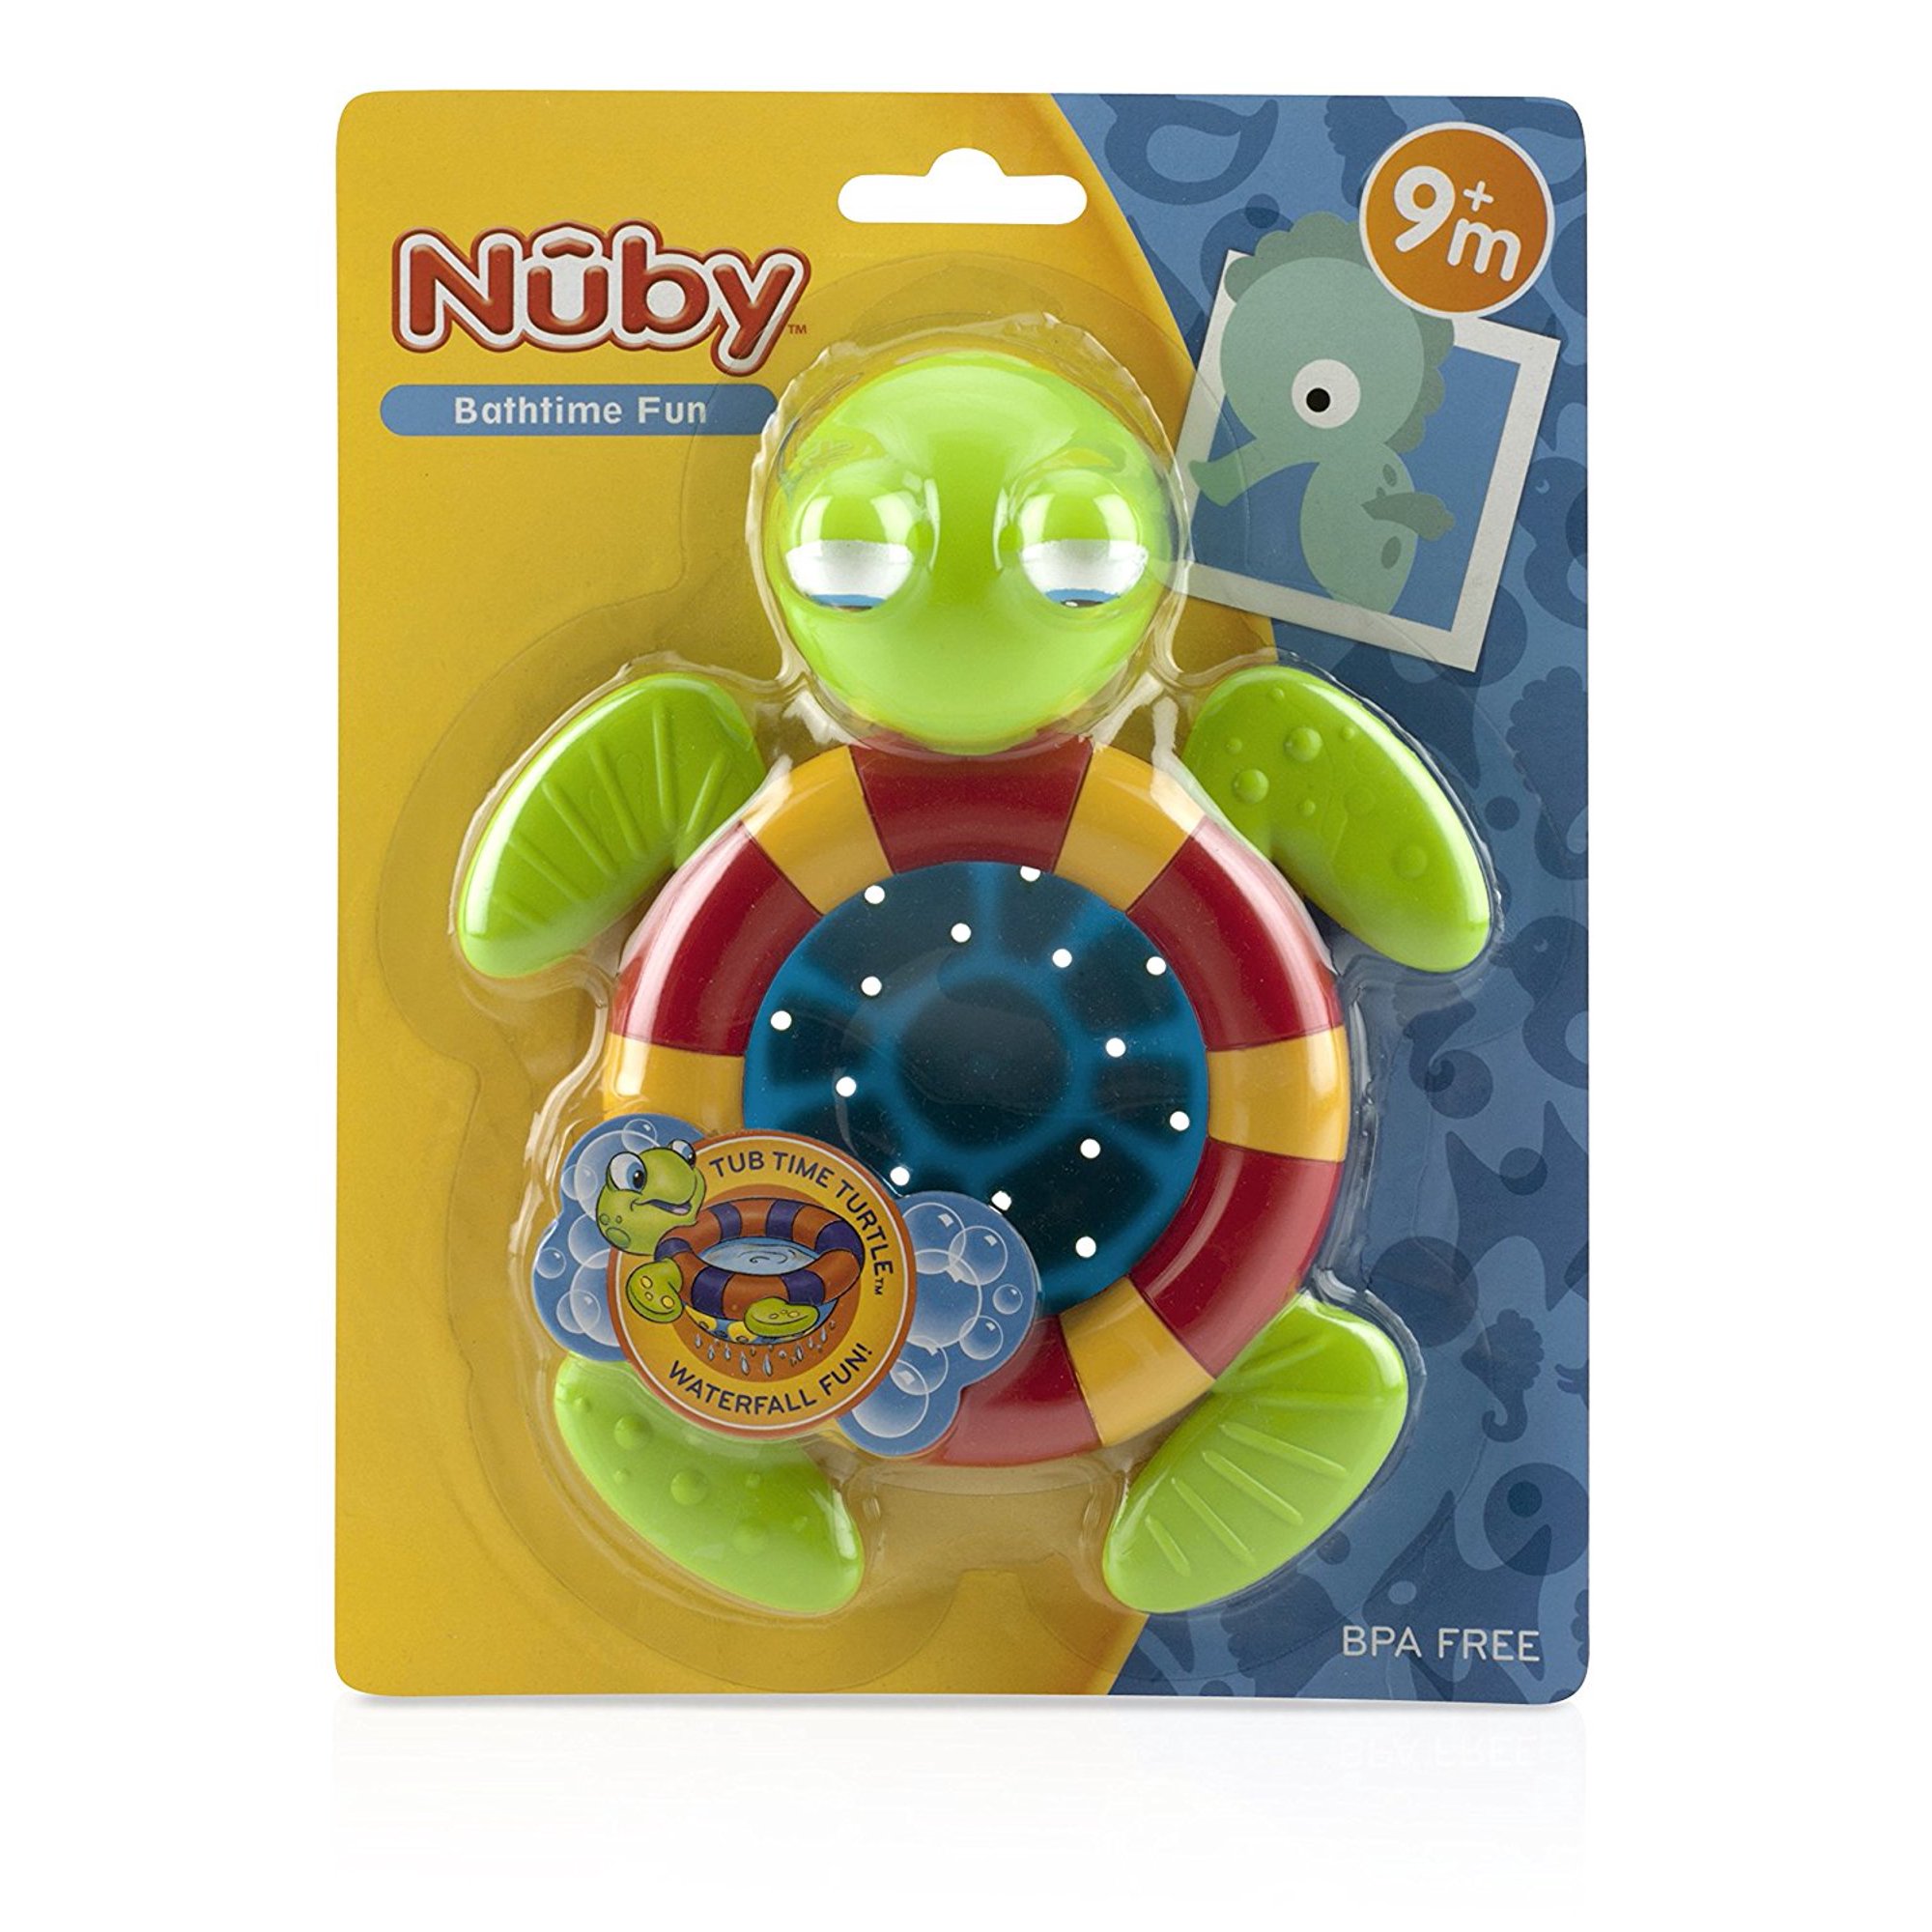 Nuby Tub Time Turtle